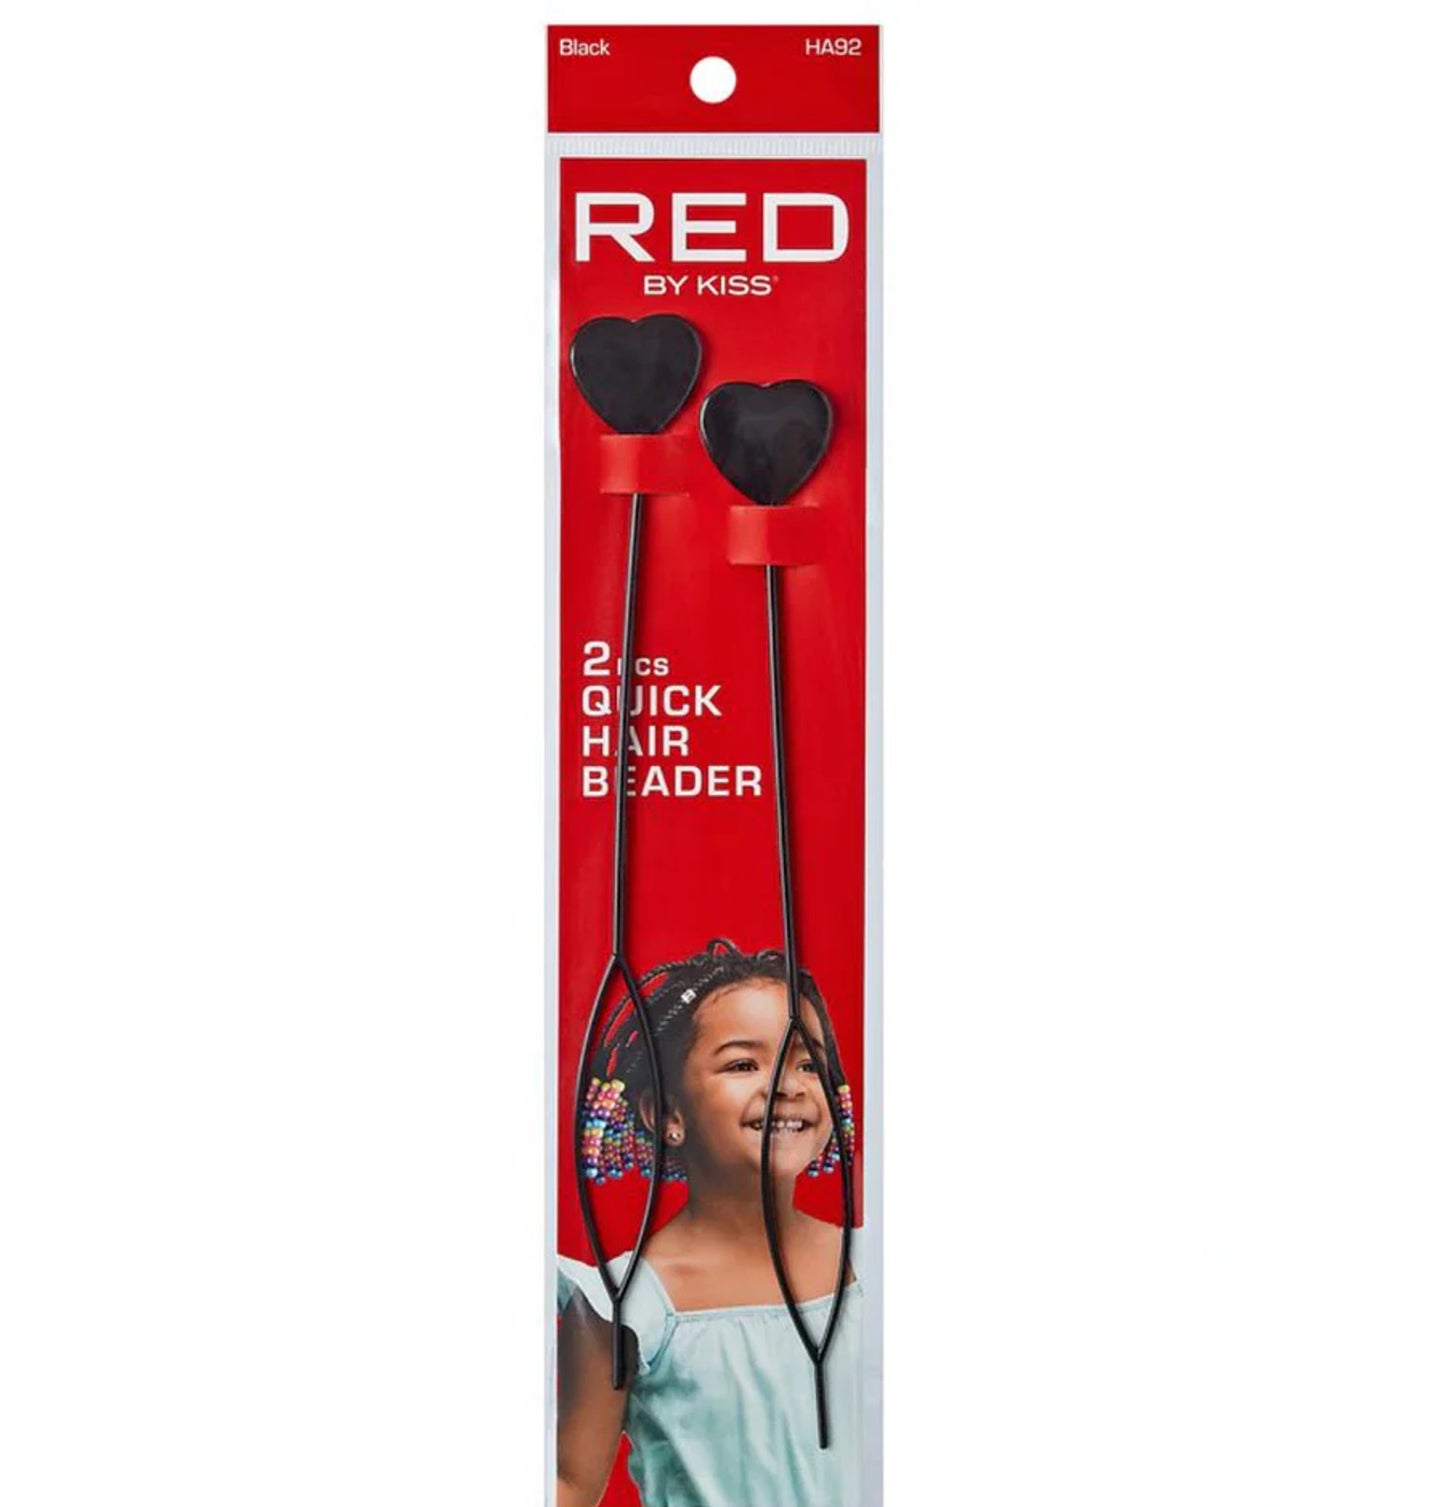 RED Hair Beads - Beader 2-piece